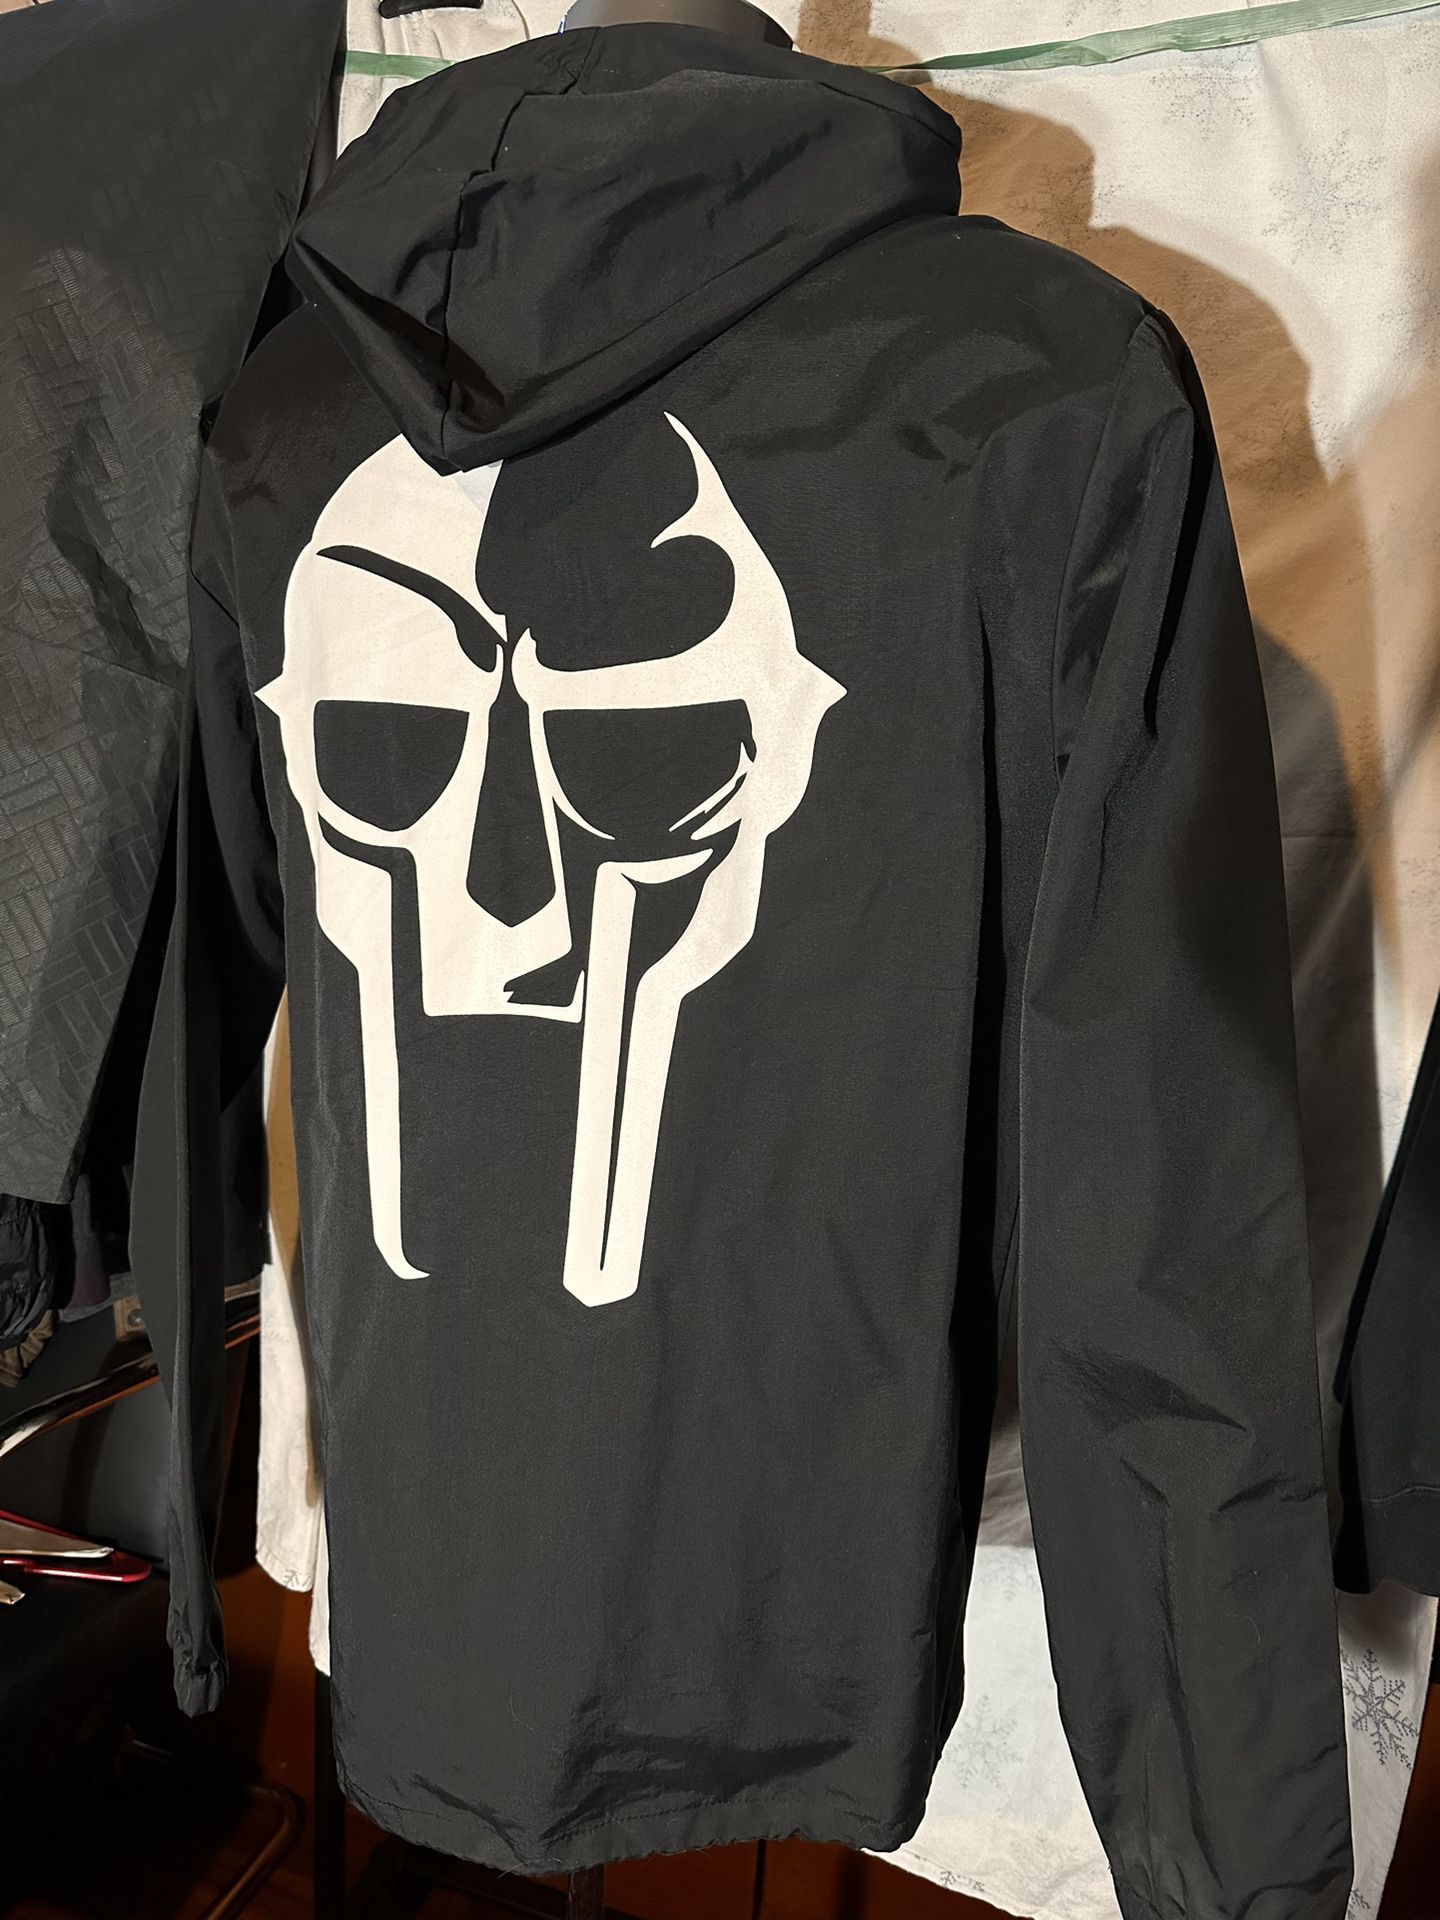 The Hundreds x MF Doom “The Mask” Jacket 